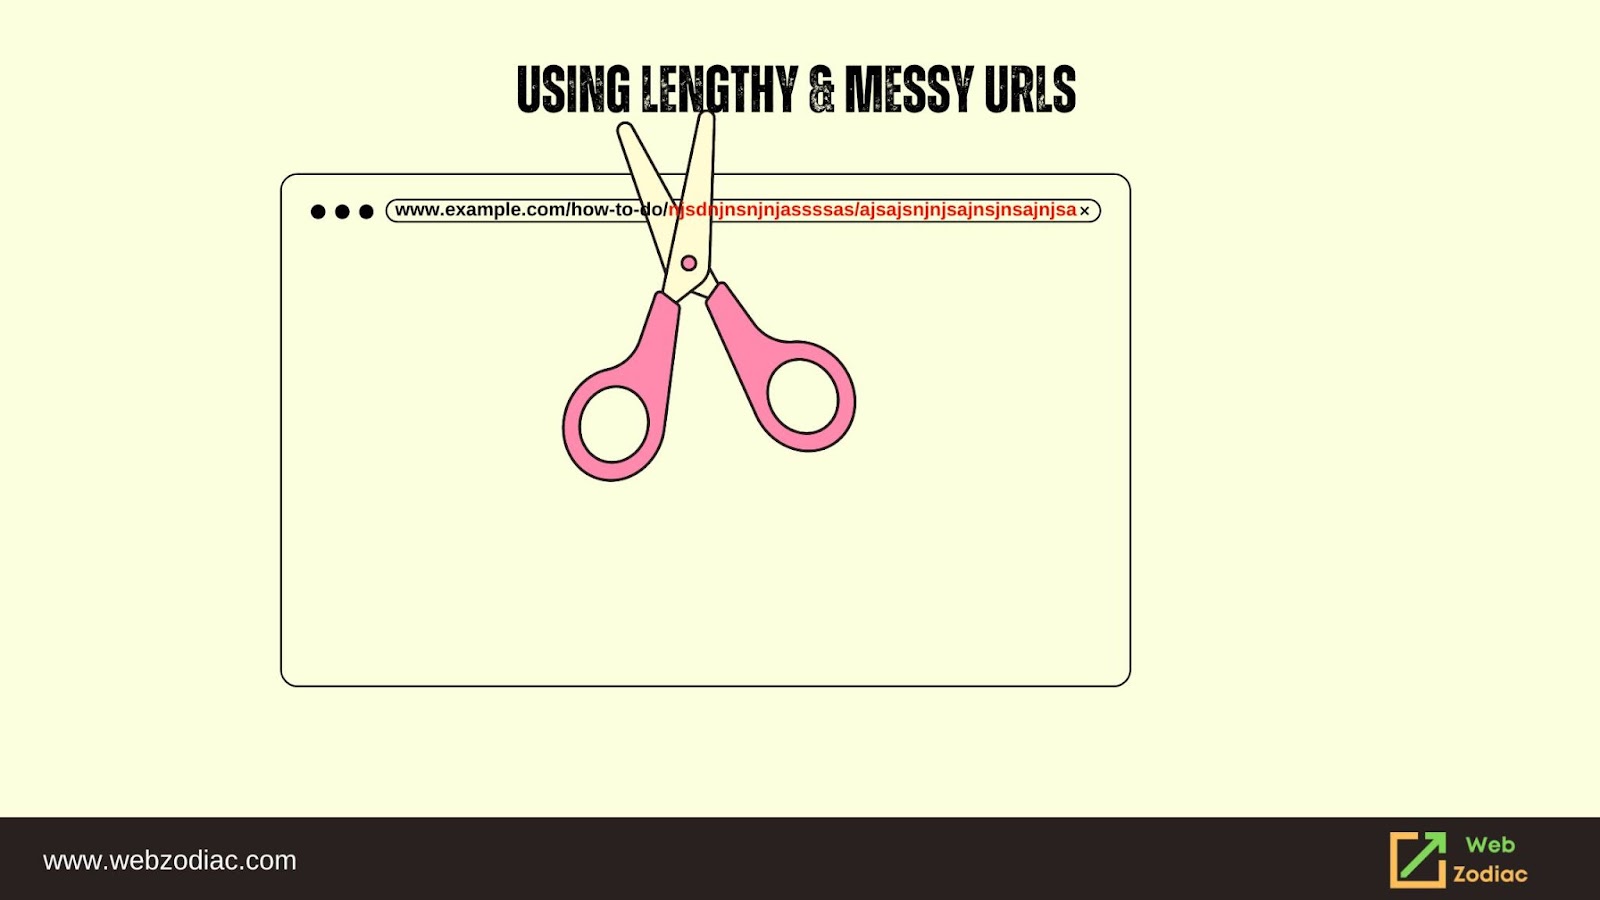 Messy & Lengthy URLs Image